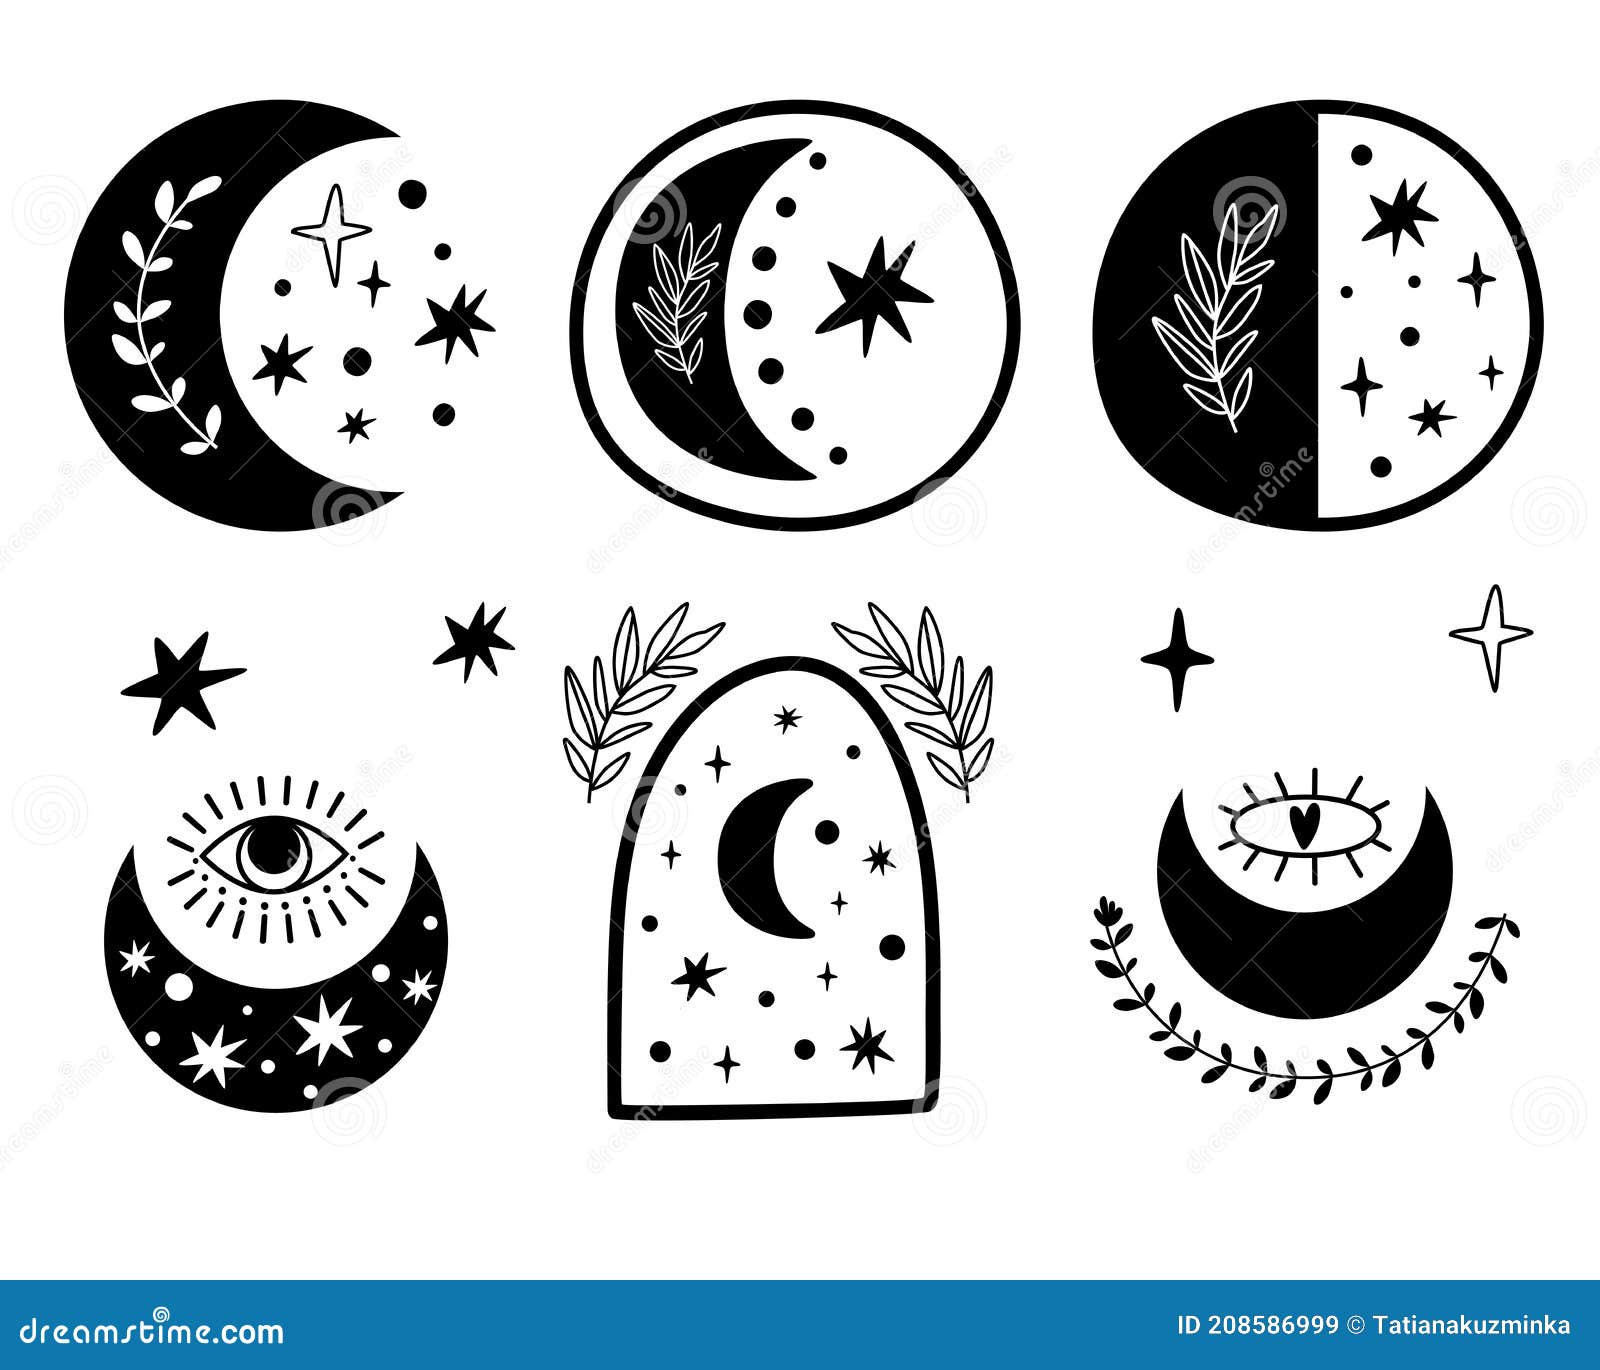 Boho Moon Set Celestial Moon Logo Collection Moon And Stars Isolated